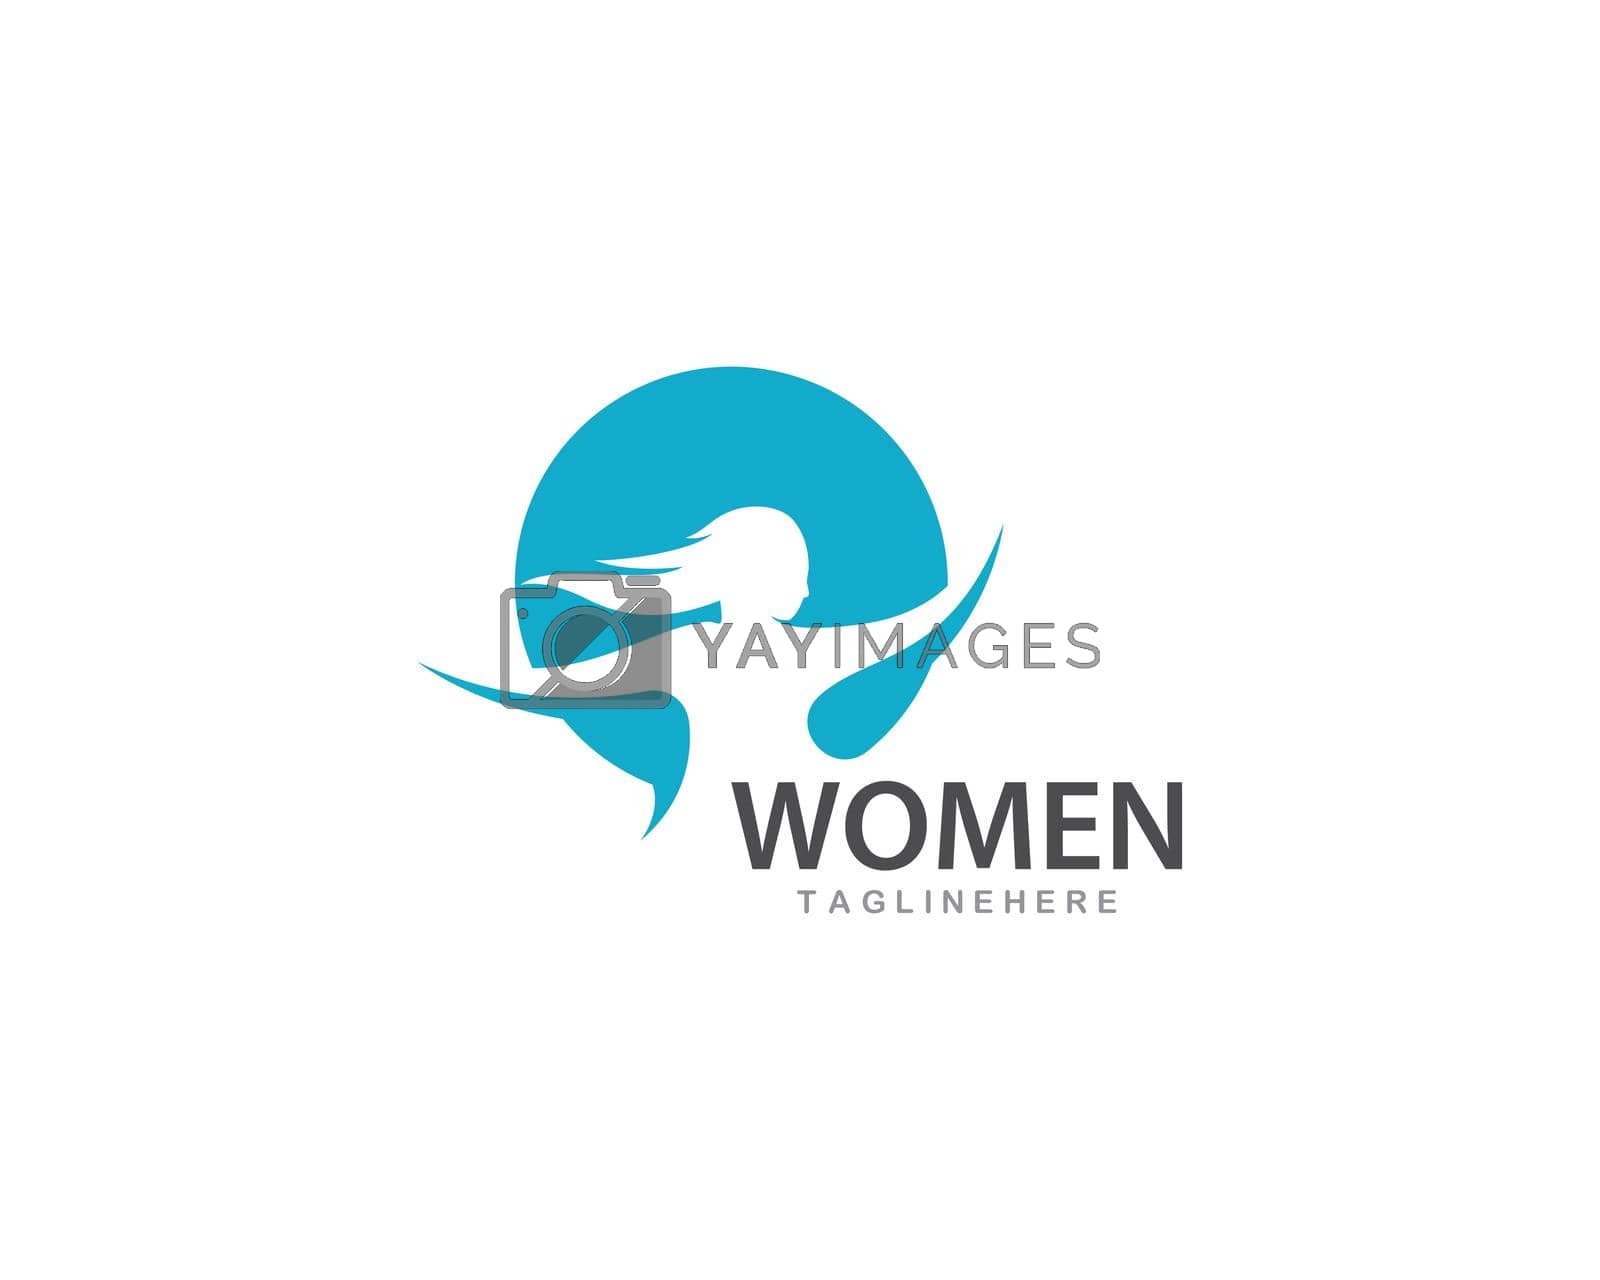 Beauty Woman logo vector template